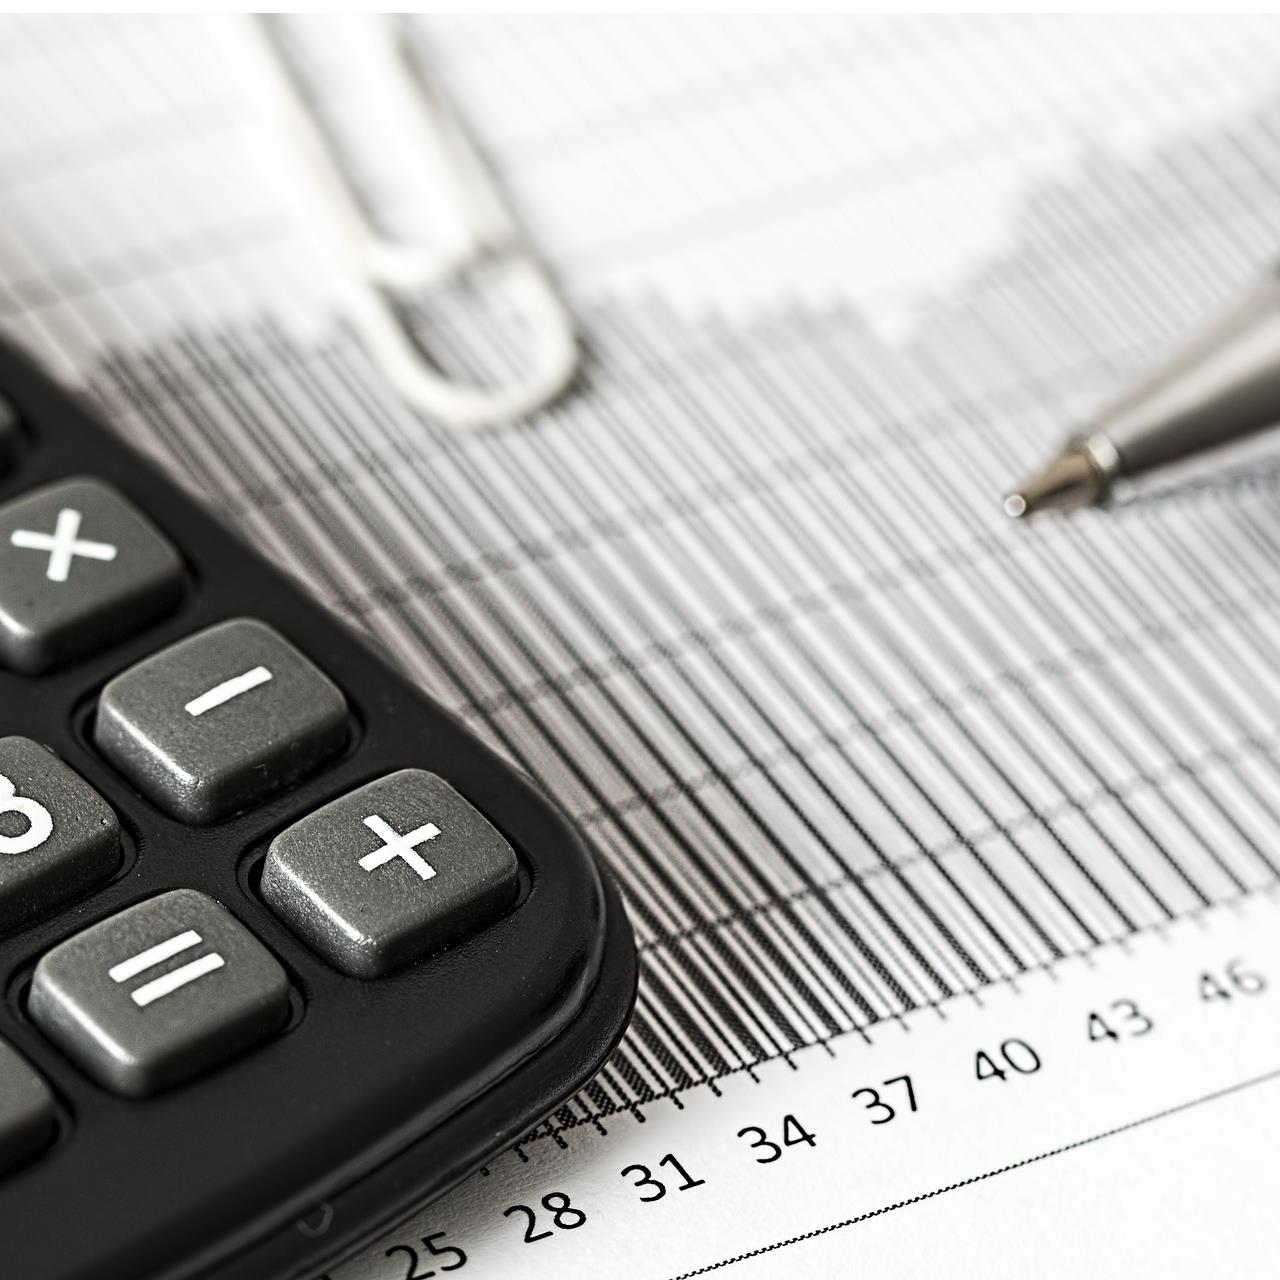 Calculator and finance paperwork